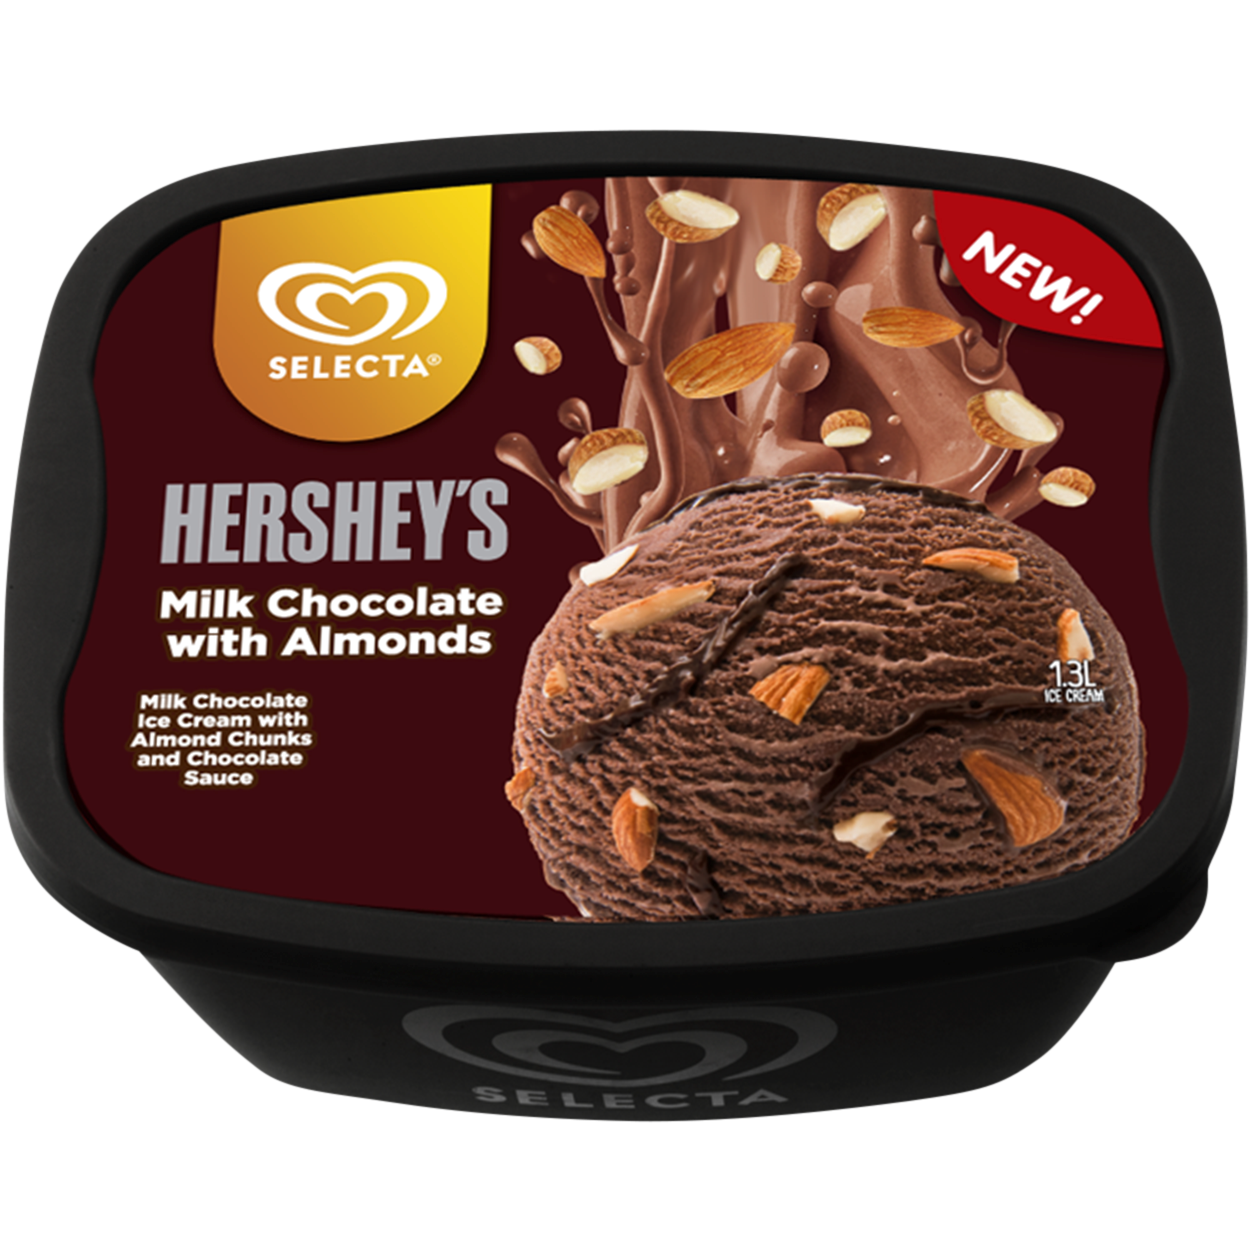 Selecta HERSHEY'S Milk Chocolate with Almonds Ice Cream